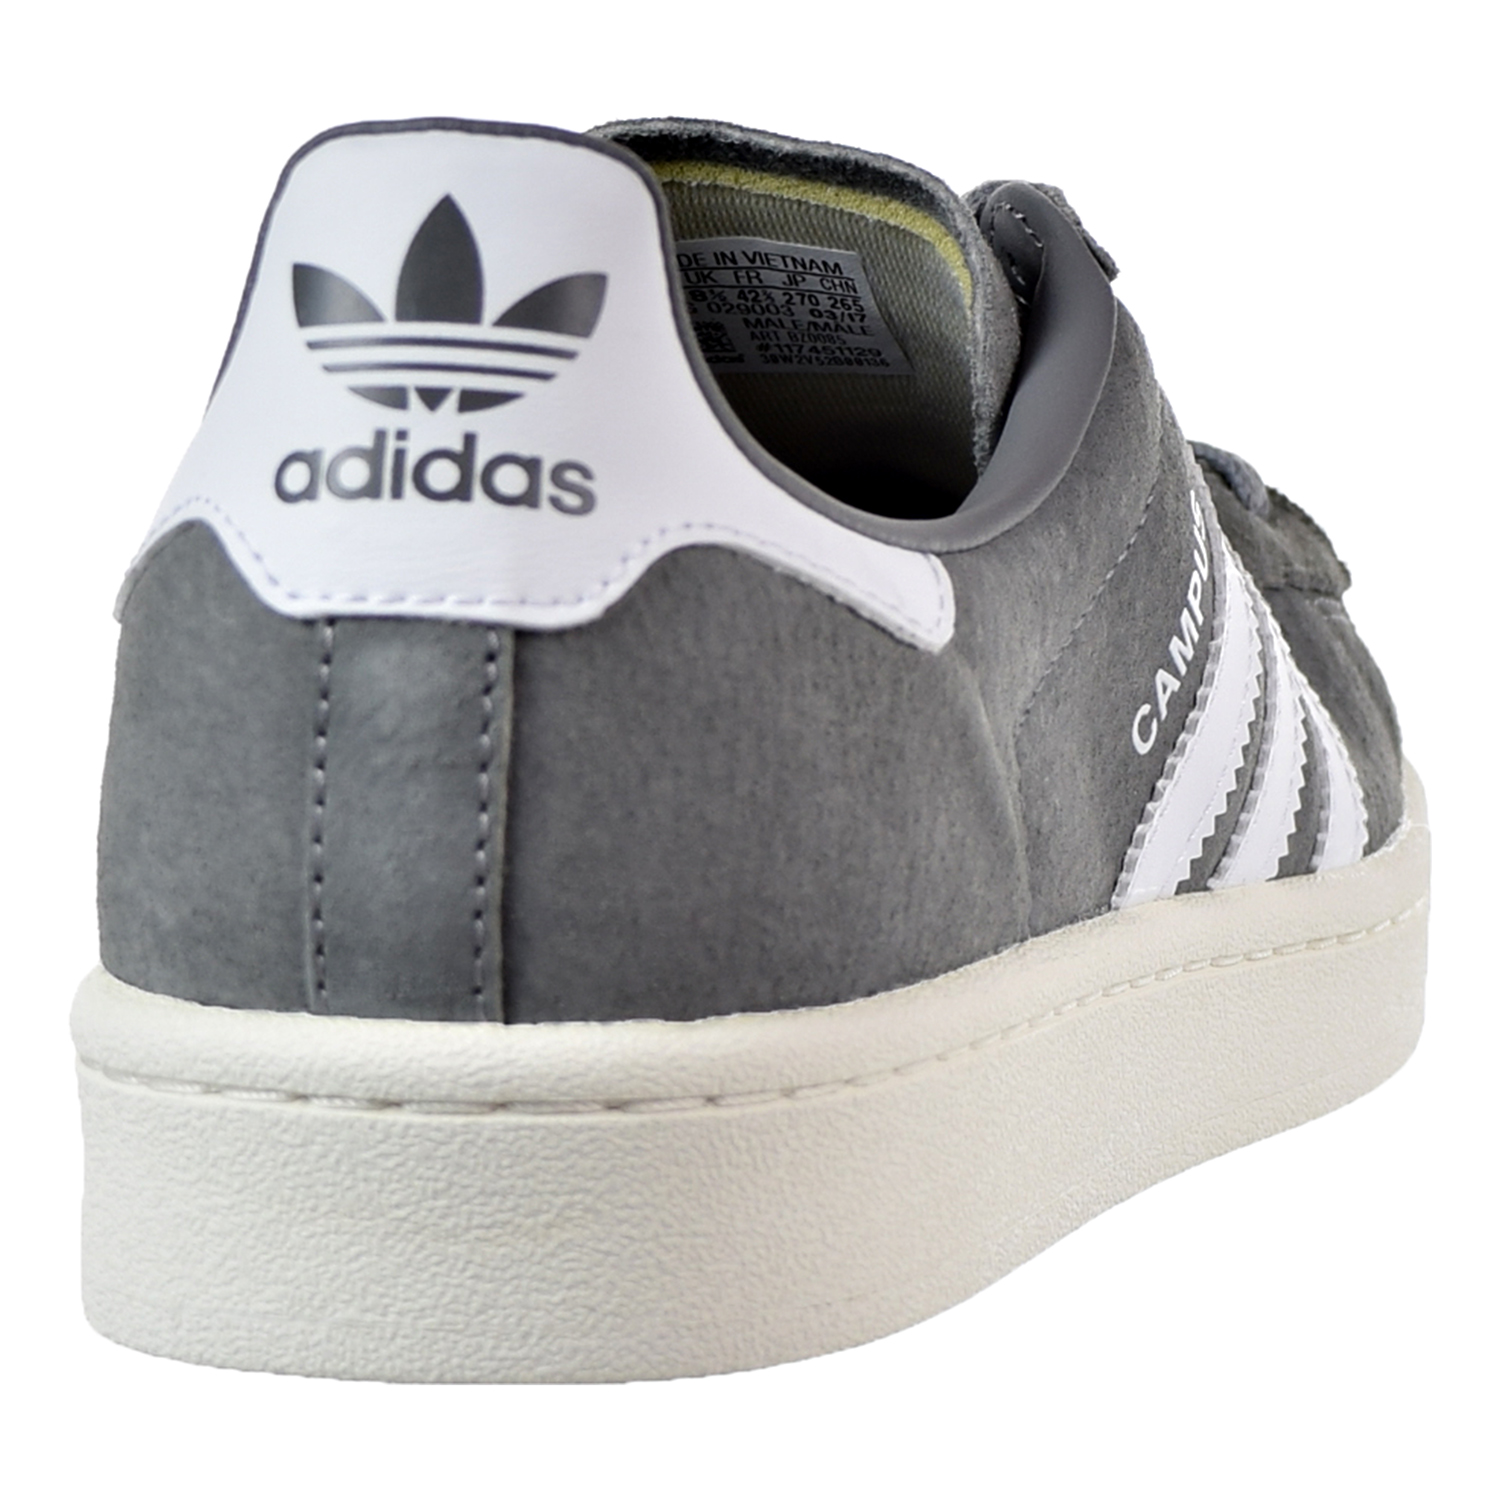 Adidas Campus Men's Shoes Grey-White-White bz0085 | eBay